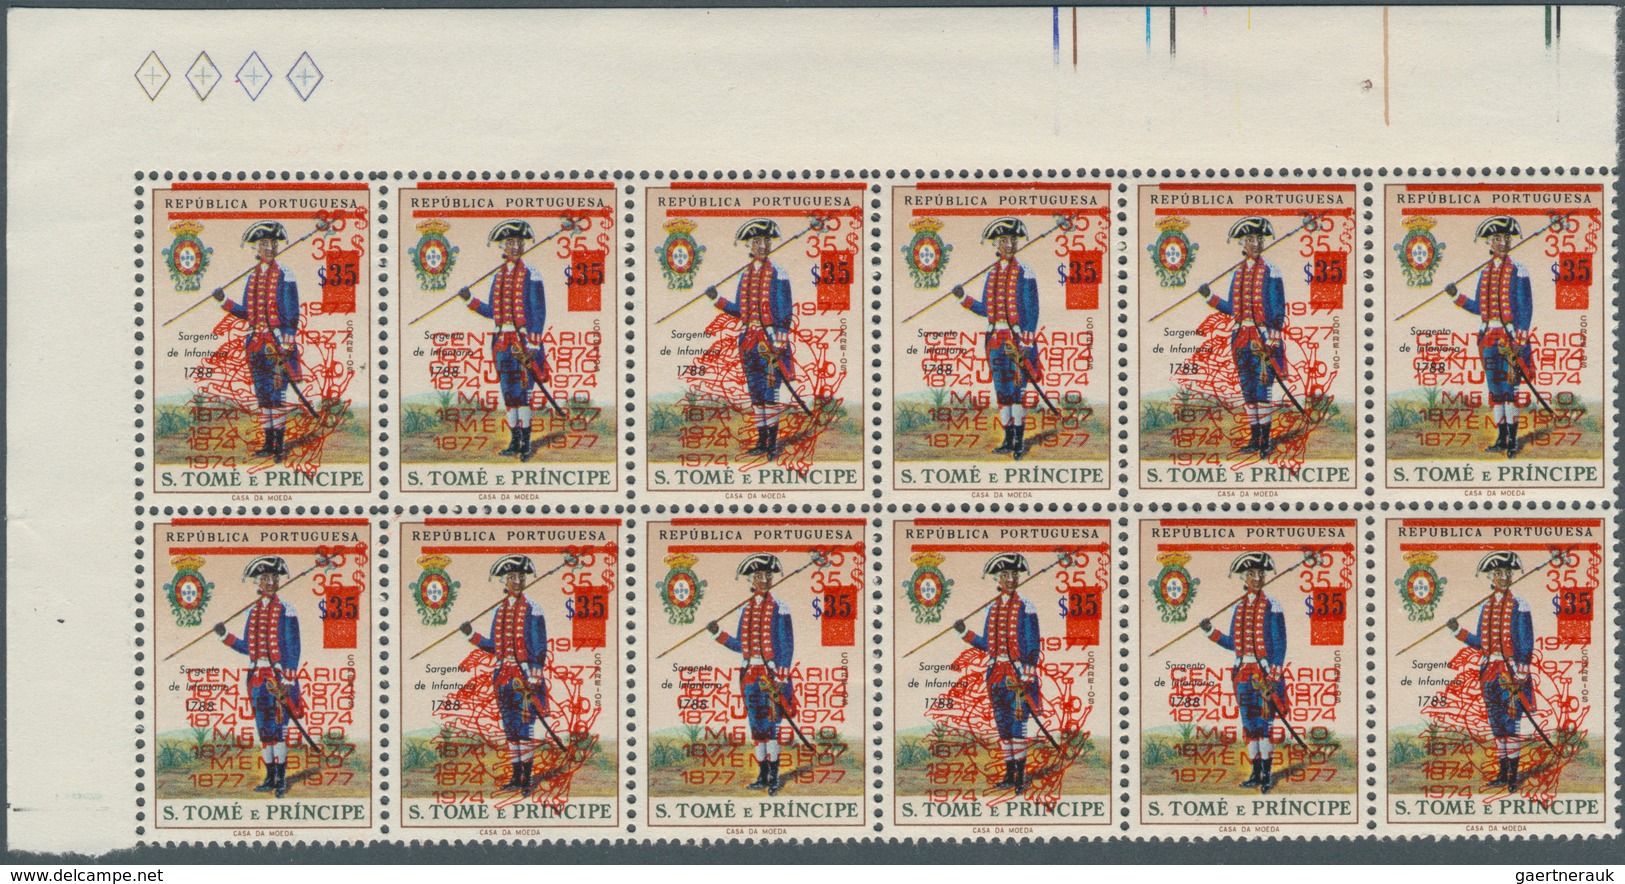 23937 St. Thomas Und Prinzeninsel - Sao Thome E Principe: 1977, Centenary Of United Postal Union (UPU) 0.3 - Sao Tome Et Principe